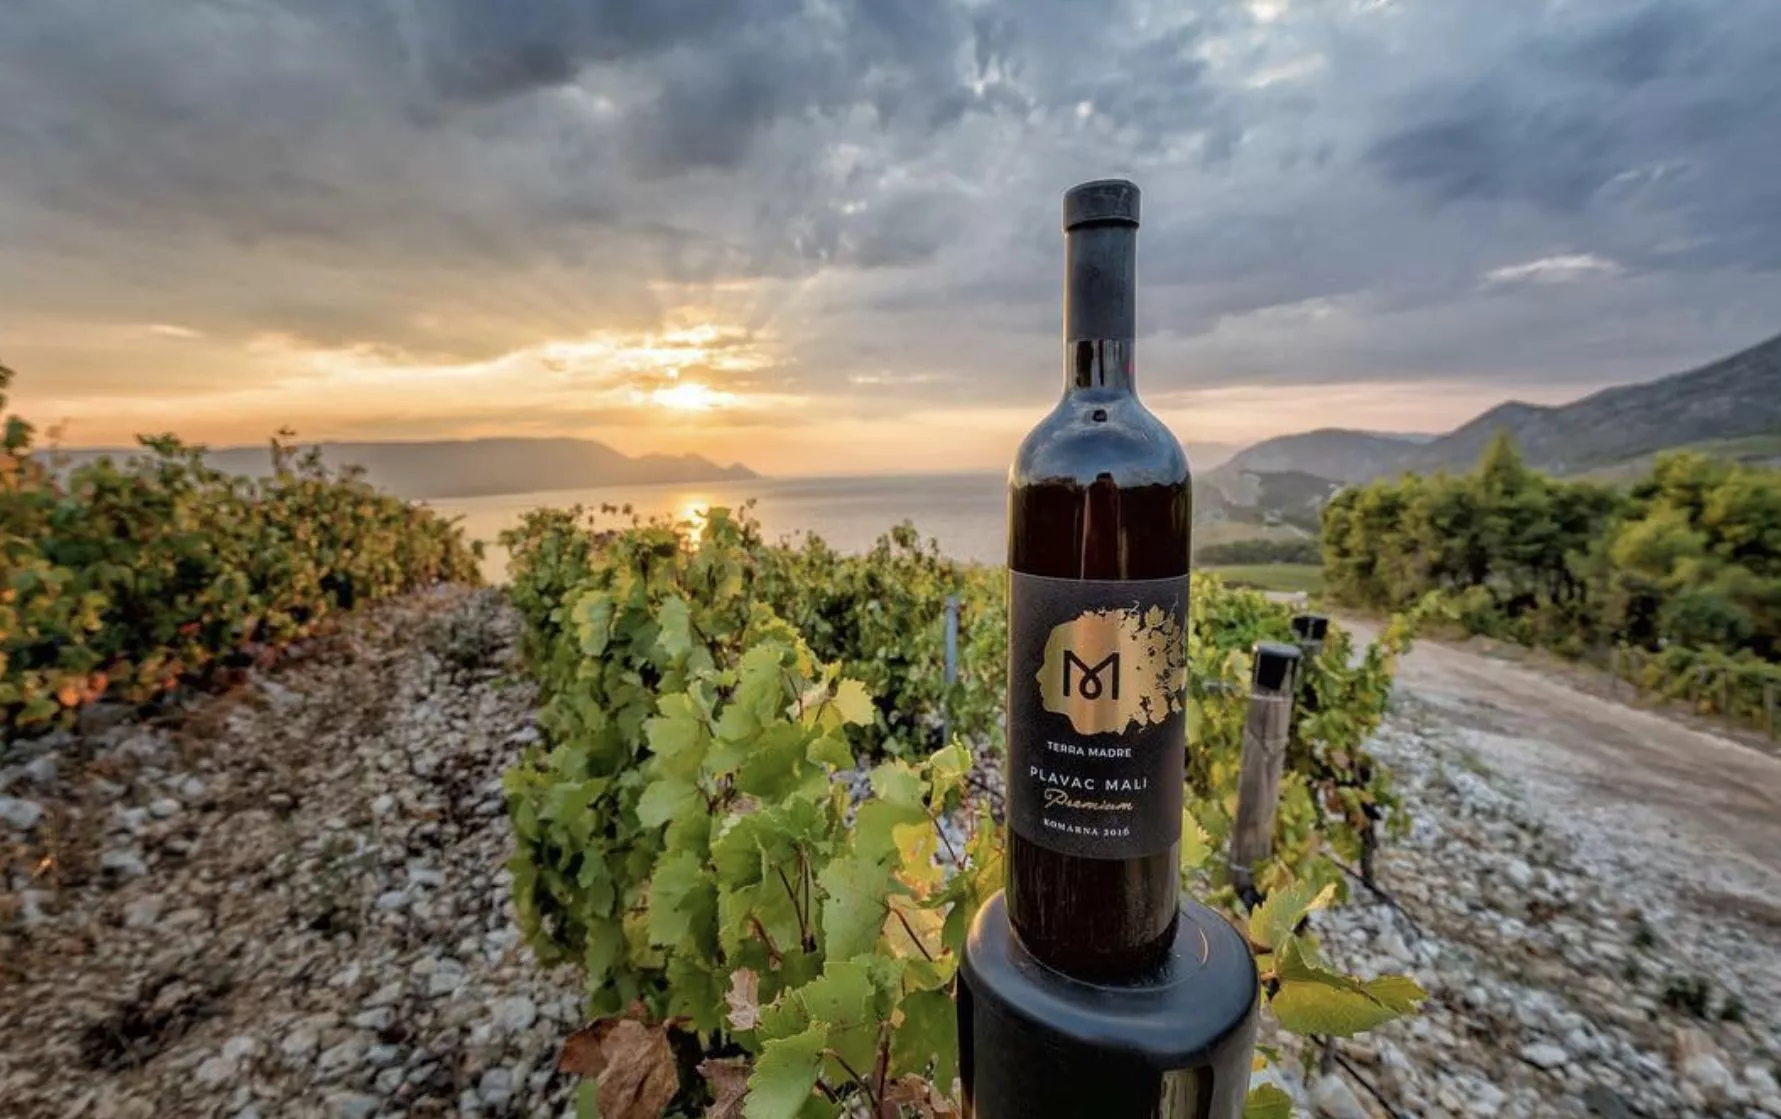 Coronica in Croatia, Europe | Wineries - Rated 0.9